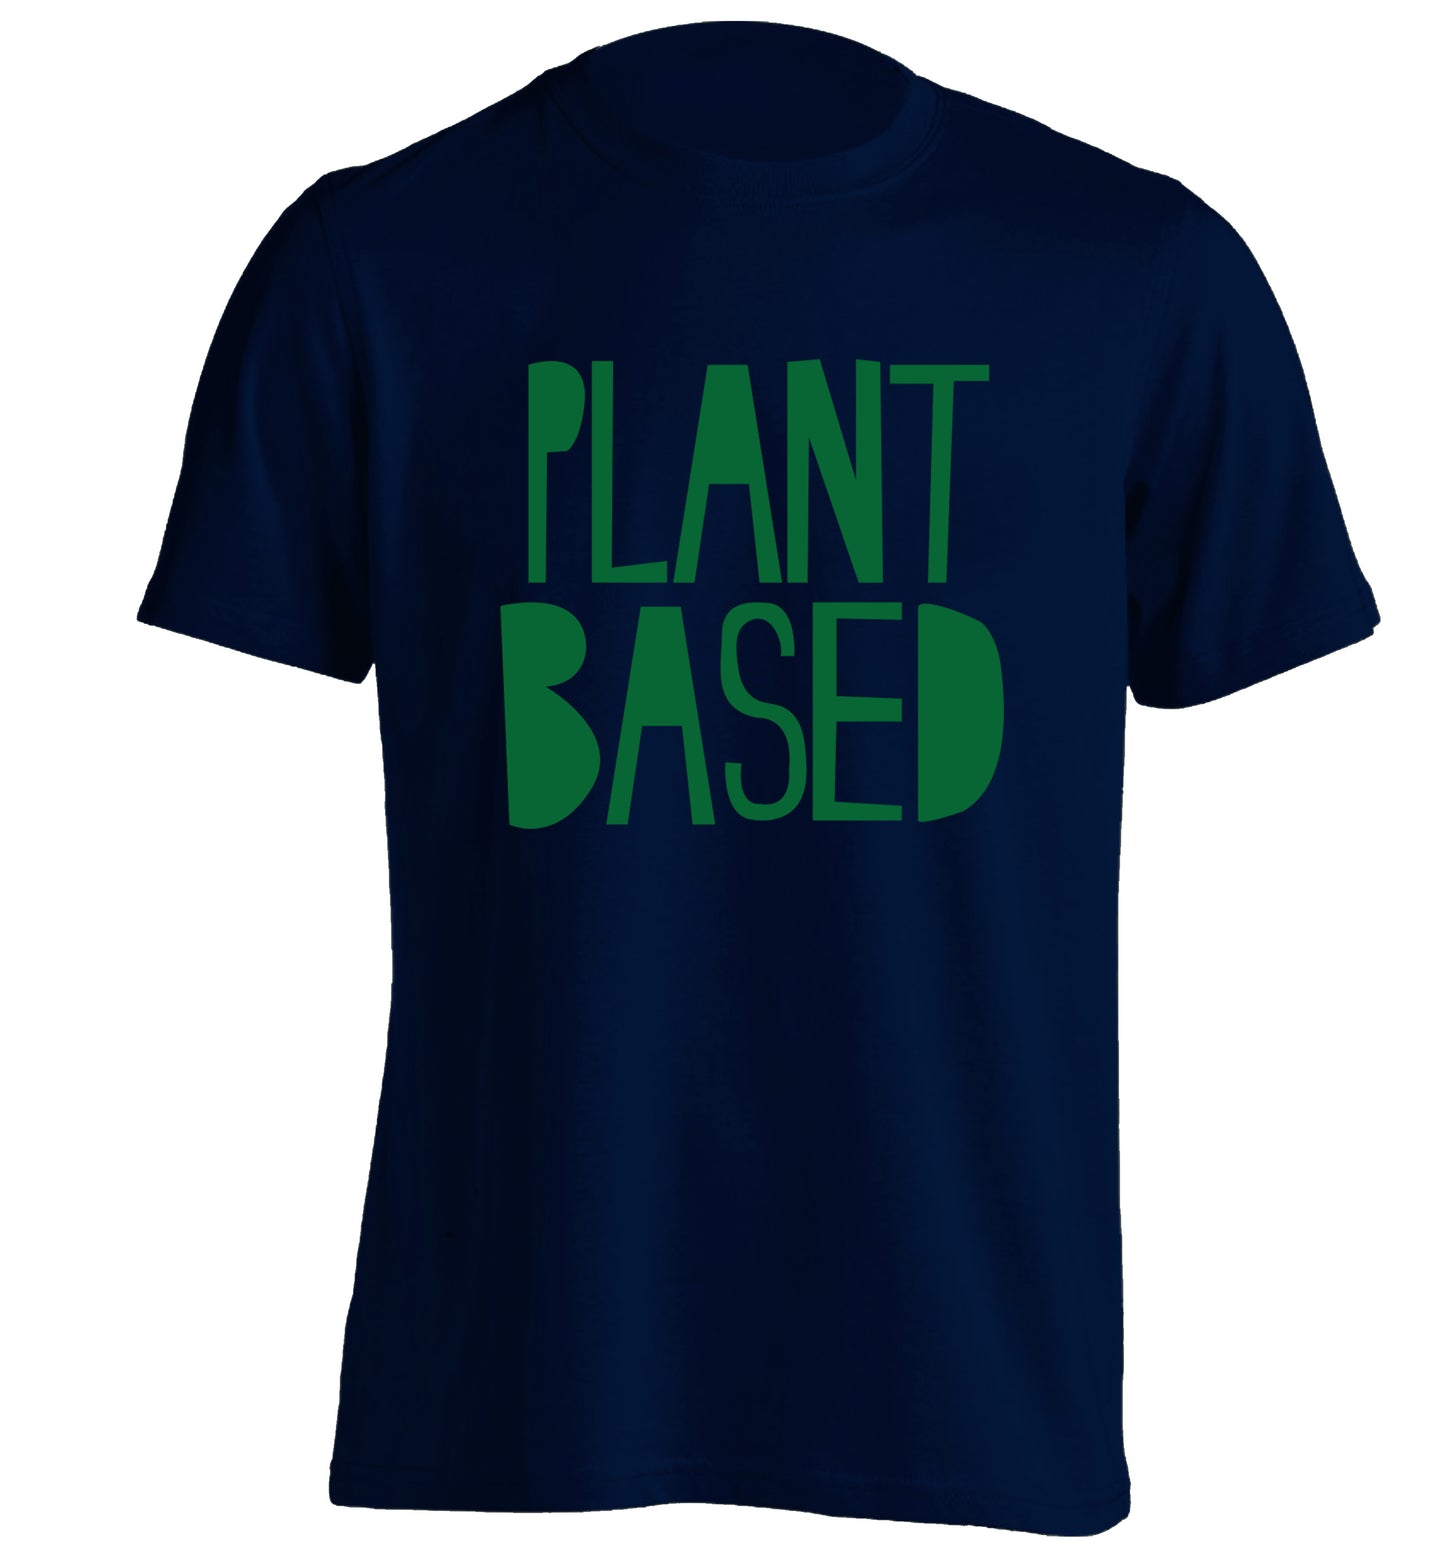 Plant Based adults unisex navy Tshirt 2XL